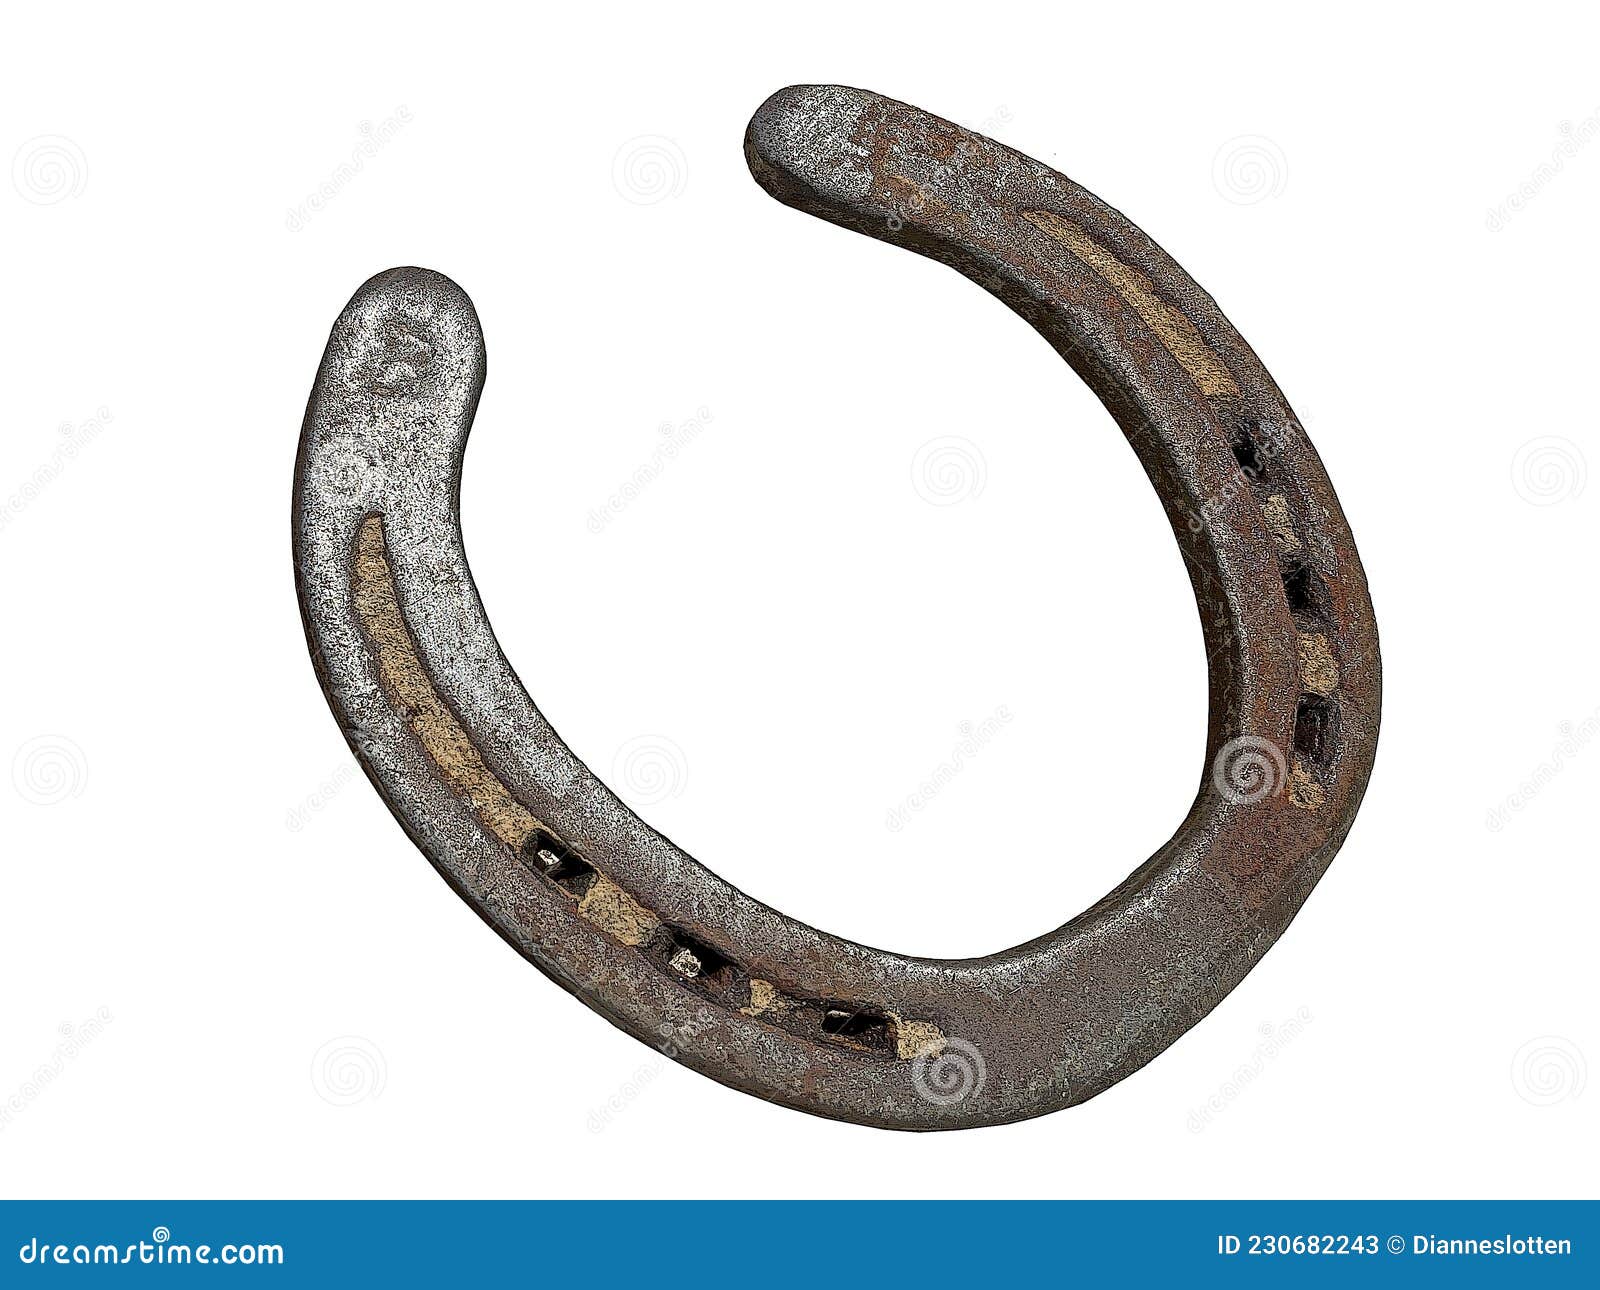 clipart  closeup of one single rusty horseshoe